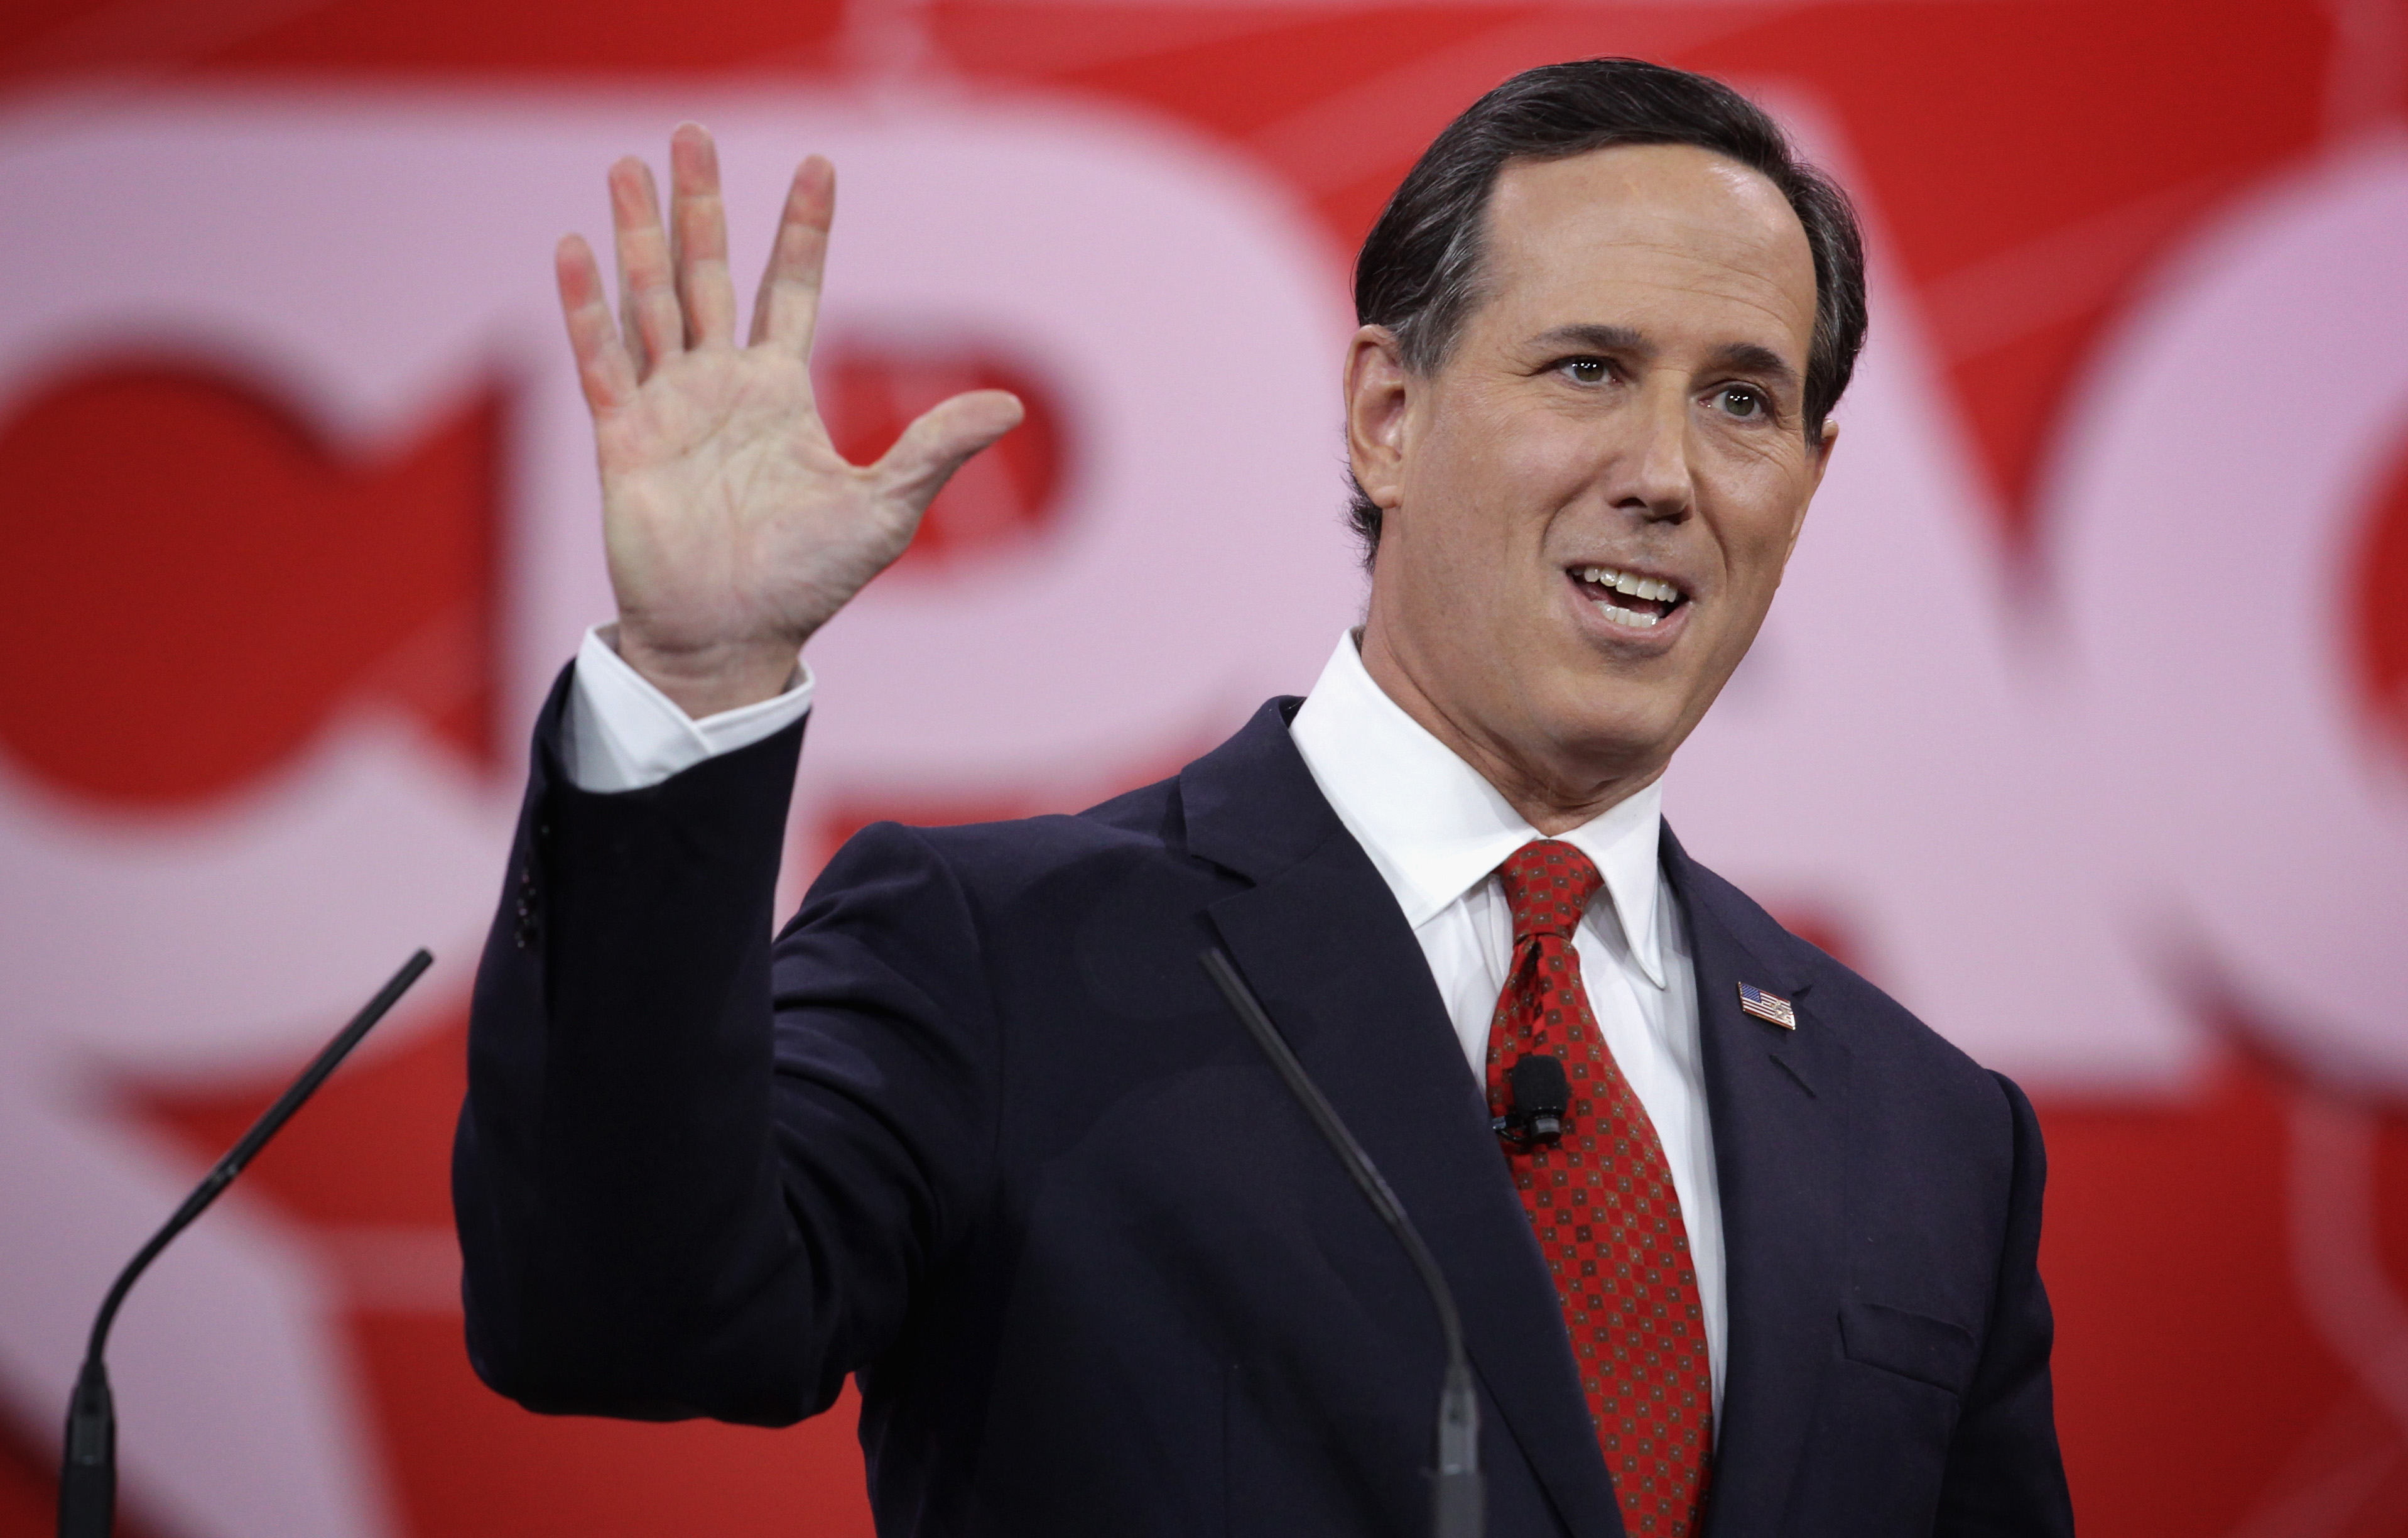 Rick Santorum quits presidential race, endorses Marco Rubio - CBS News3834 x 2448